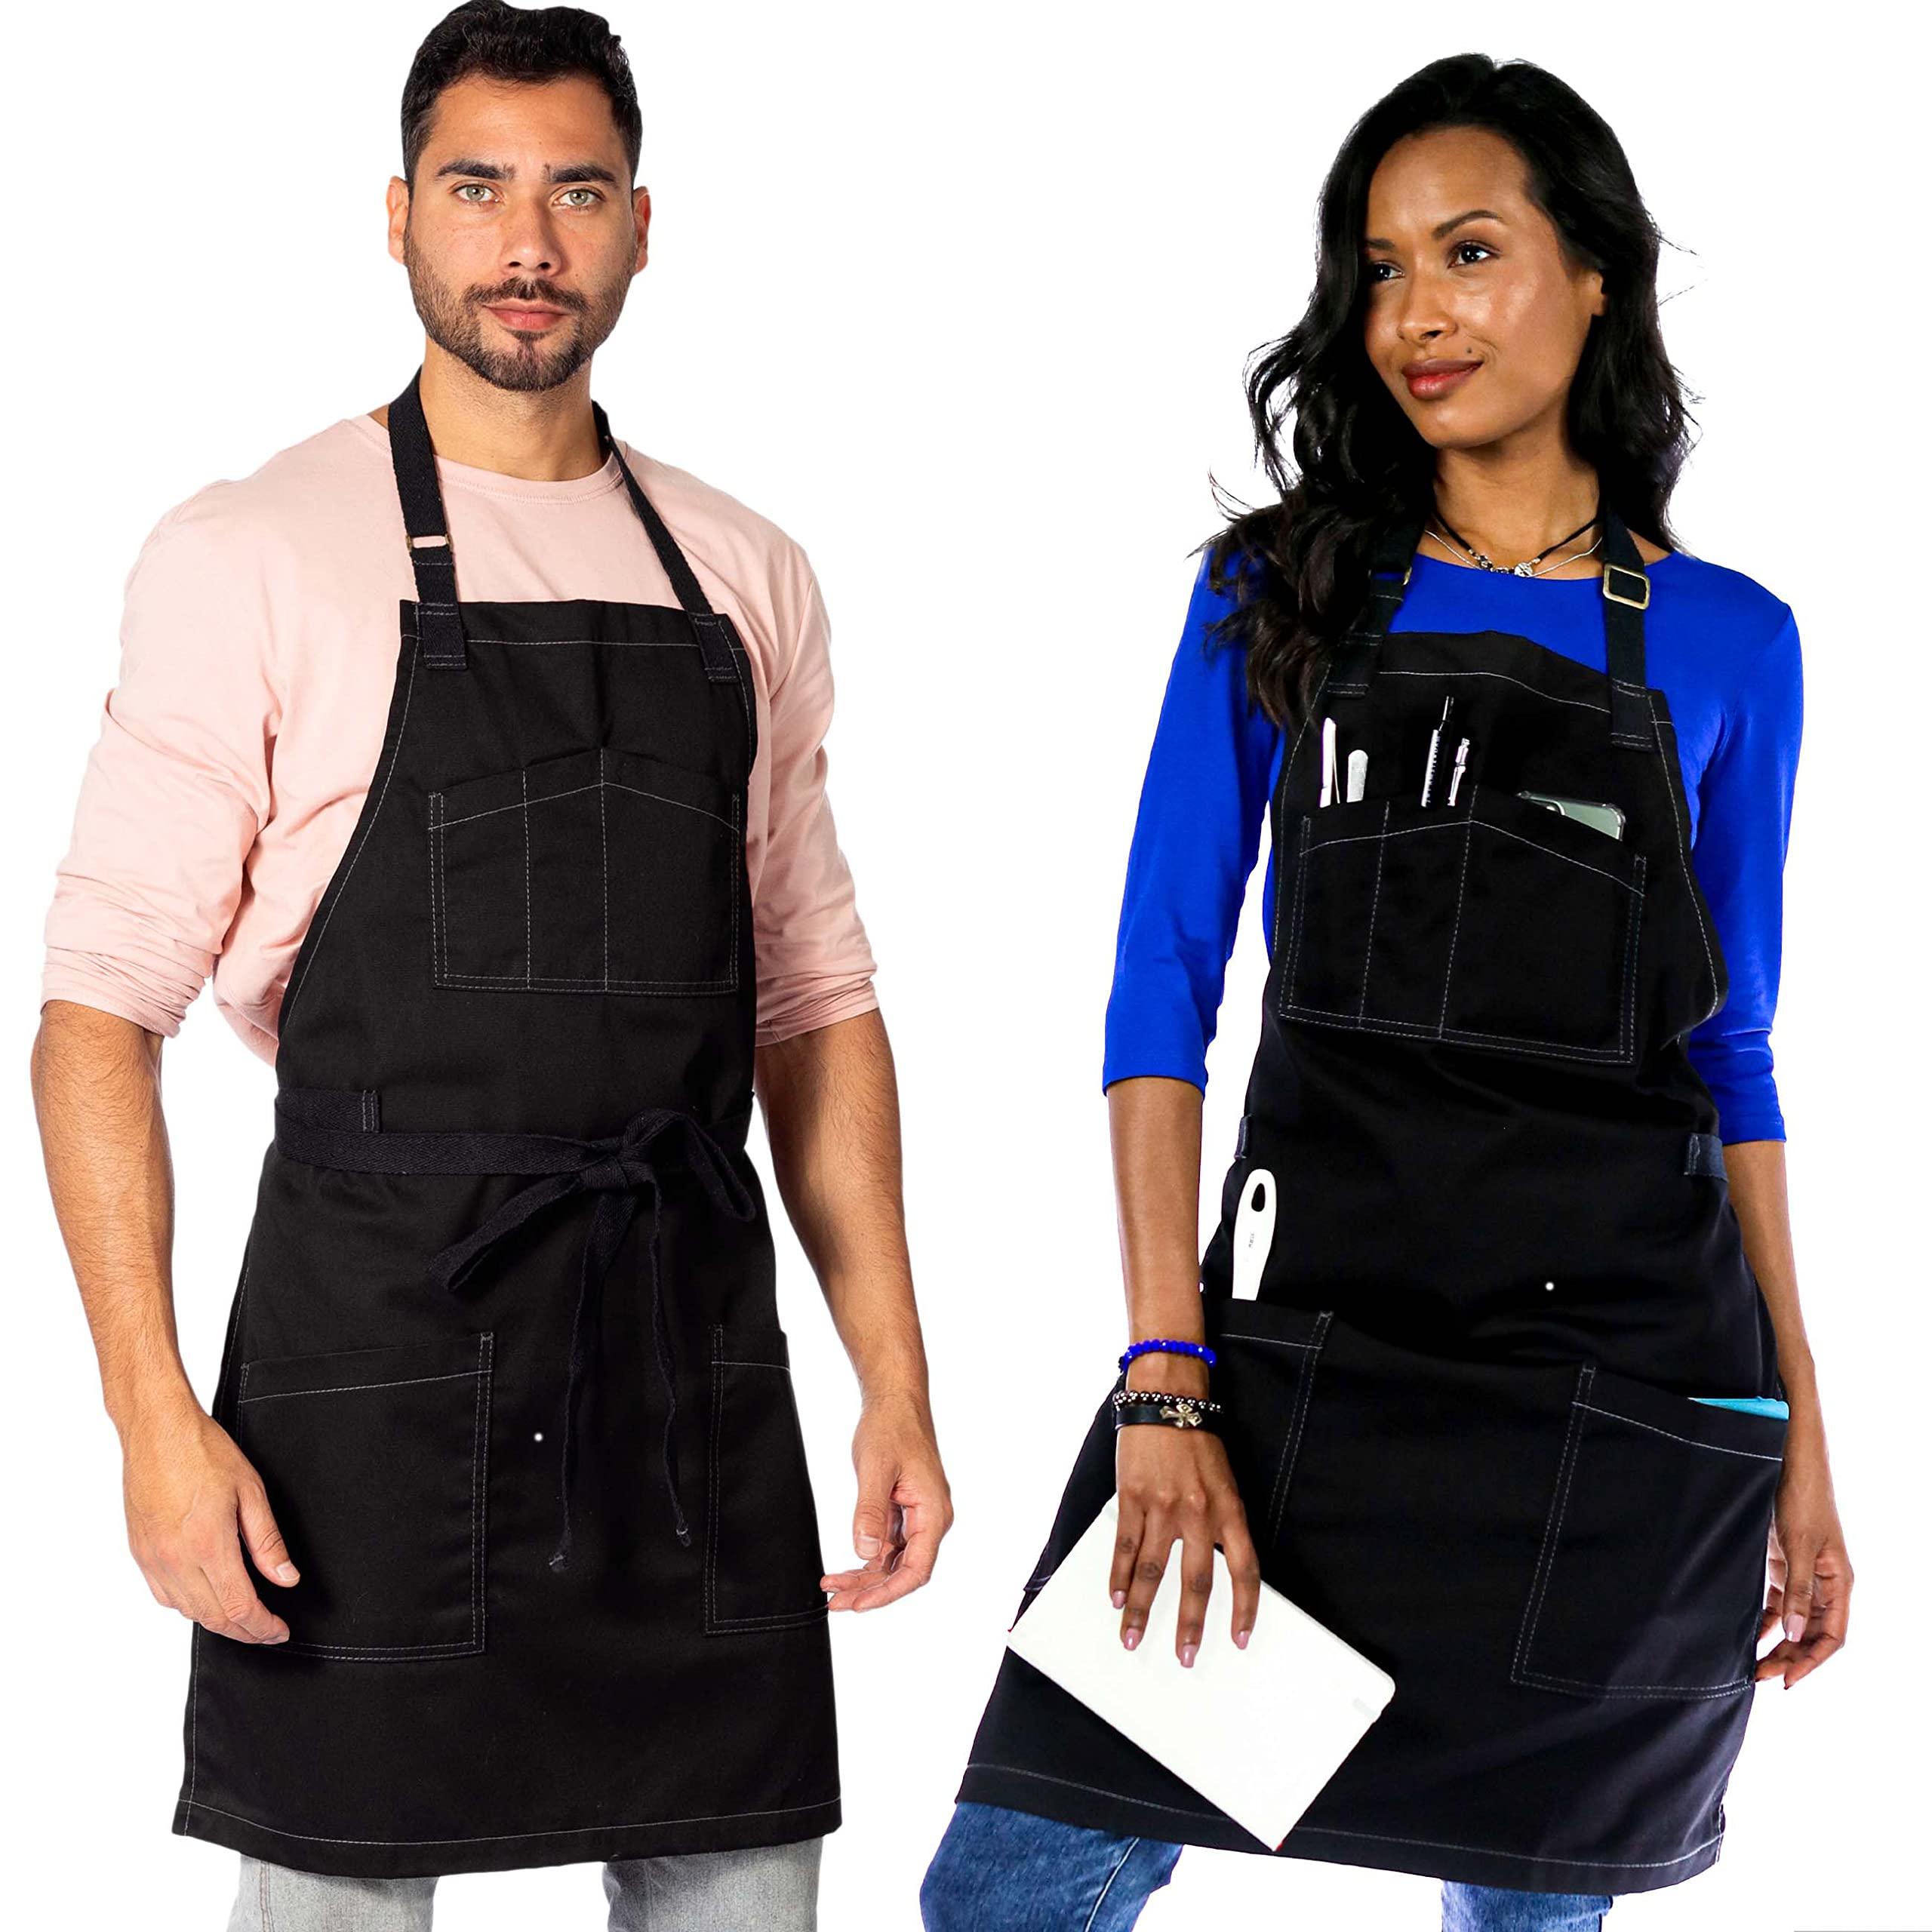 Under NY Sky Chef Apron – Professional Black Twill – Cotton Straps - Smart Pockets - Adjustable for Men and Women – Pro Chef, Cook, Kitchen, Baker, Barista, Bartender, Server Aprons